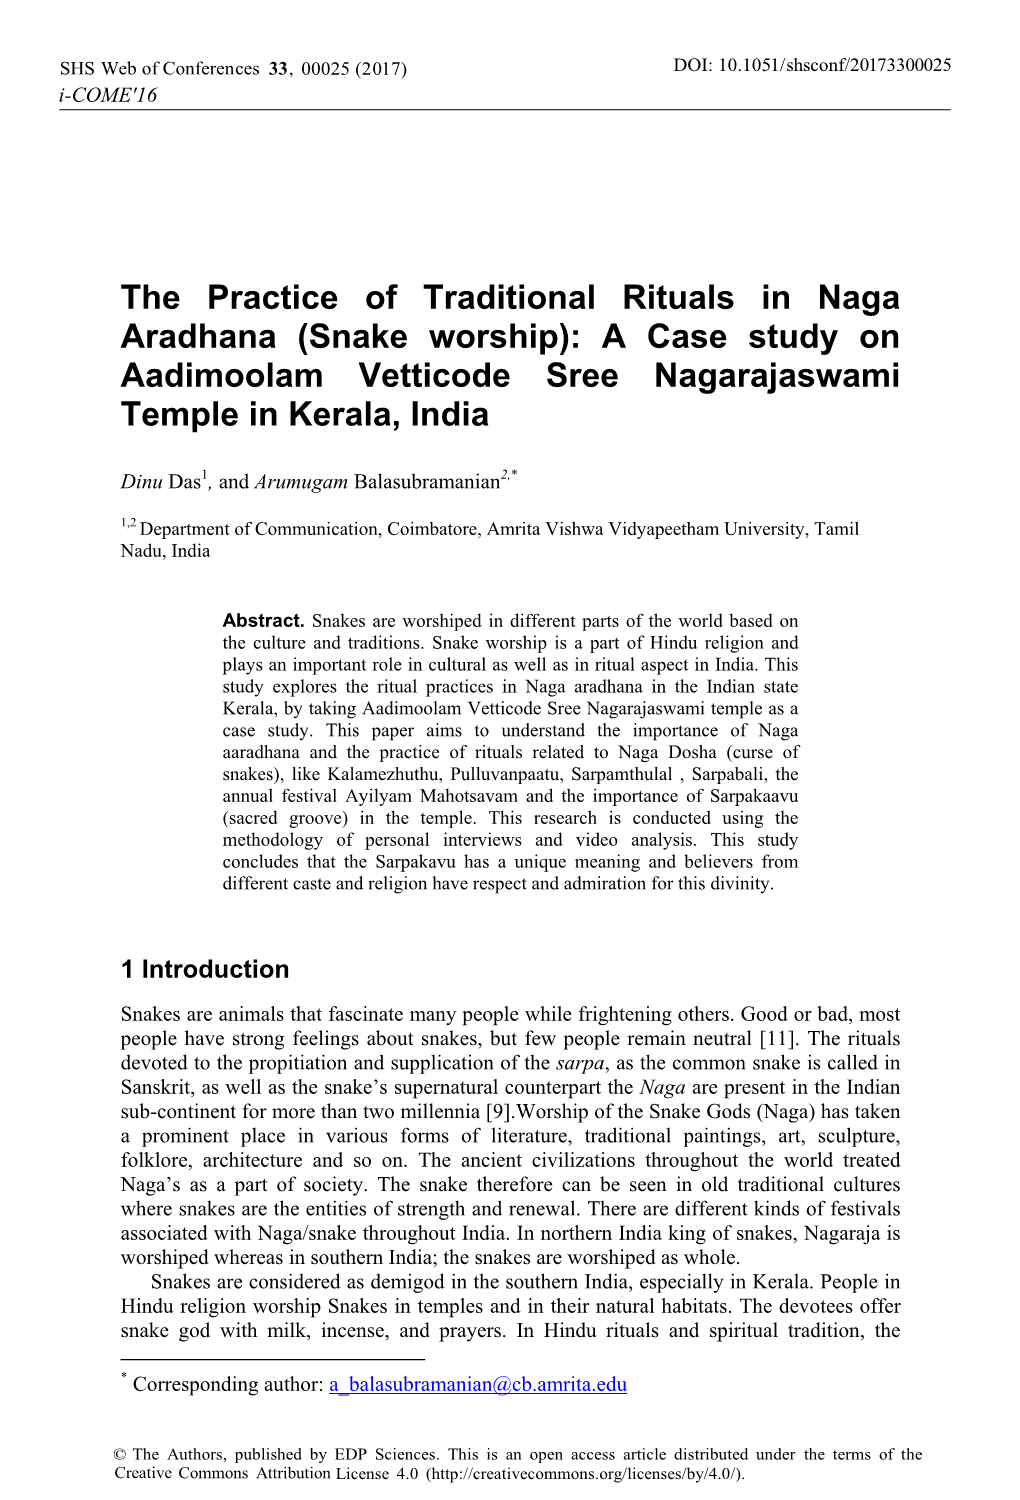 The Practice of Traditional Rituals in Naga Aradhana (Snake Worship): a Case Study on Aadimoolam Vetticode Sree Nagarajaswami Temple in Kerala, India